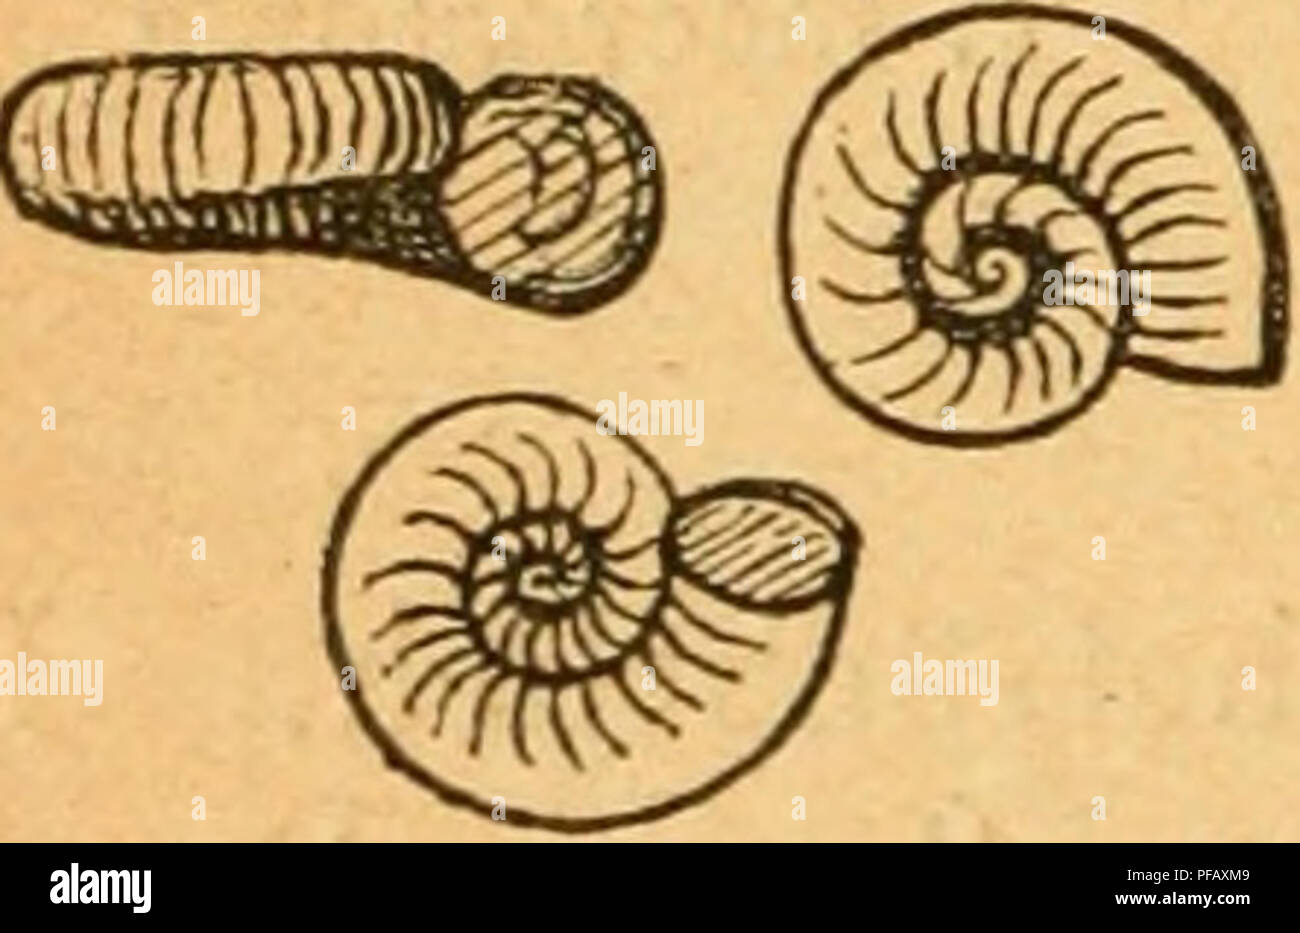 . Deutsche excursions-mollusken-fauna. Mollusks. 462 8. Gyrorbis cristata, Müller. Valvata cristata, Müller, Verm. bist. 11. 1774 p. 198. Nerita valvata, Gmelin, Syst. nat. ed. 13 p. 3675. — v. Alten, Augsburg p. ill t. 13 fig. 24. Valvata planorbis, Drap. tab. p. 42. — Hist. moll. p. 41 t. 1 fig. 34—35. — — Sturm, Fauna VI. 3 t. 3. — cristata, Scbroeter, Flussconcb. p. 240 t. 5 fig. 26. — C. Pfeifler, Na- turg. I. p. 101 t. 3 fig. 35. — — Küster, in Cbemnitz ed. 2 Monogr. Palud. p. 88 1.14 fig. 22—26. — — Stein, Berlin p, 88 t. 2 fig. 30. — Kobelt, Nassau p. 213 t. 5 fig. 23. — — Slavik, Böbm Stock Photo